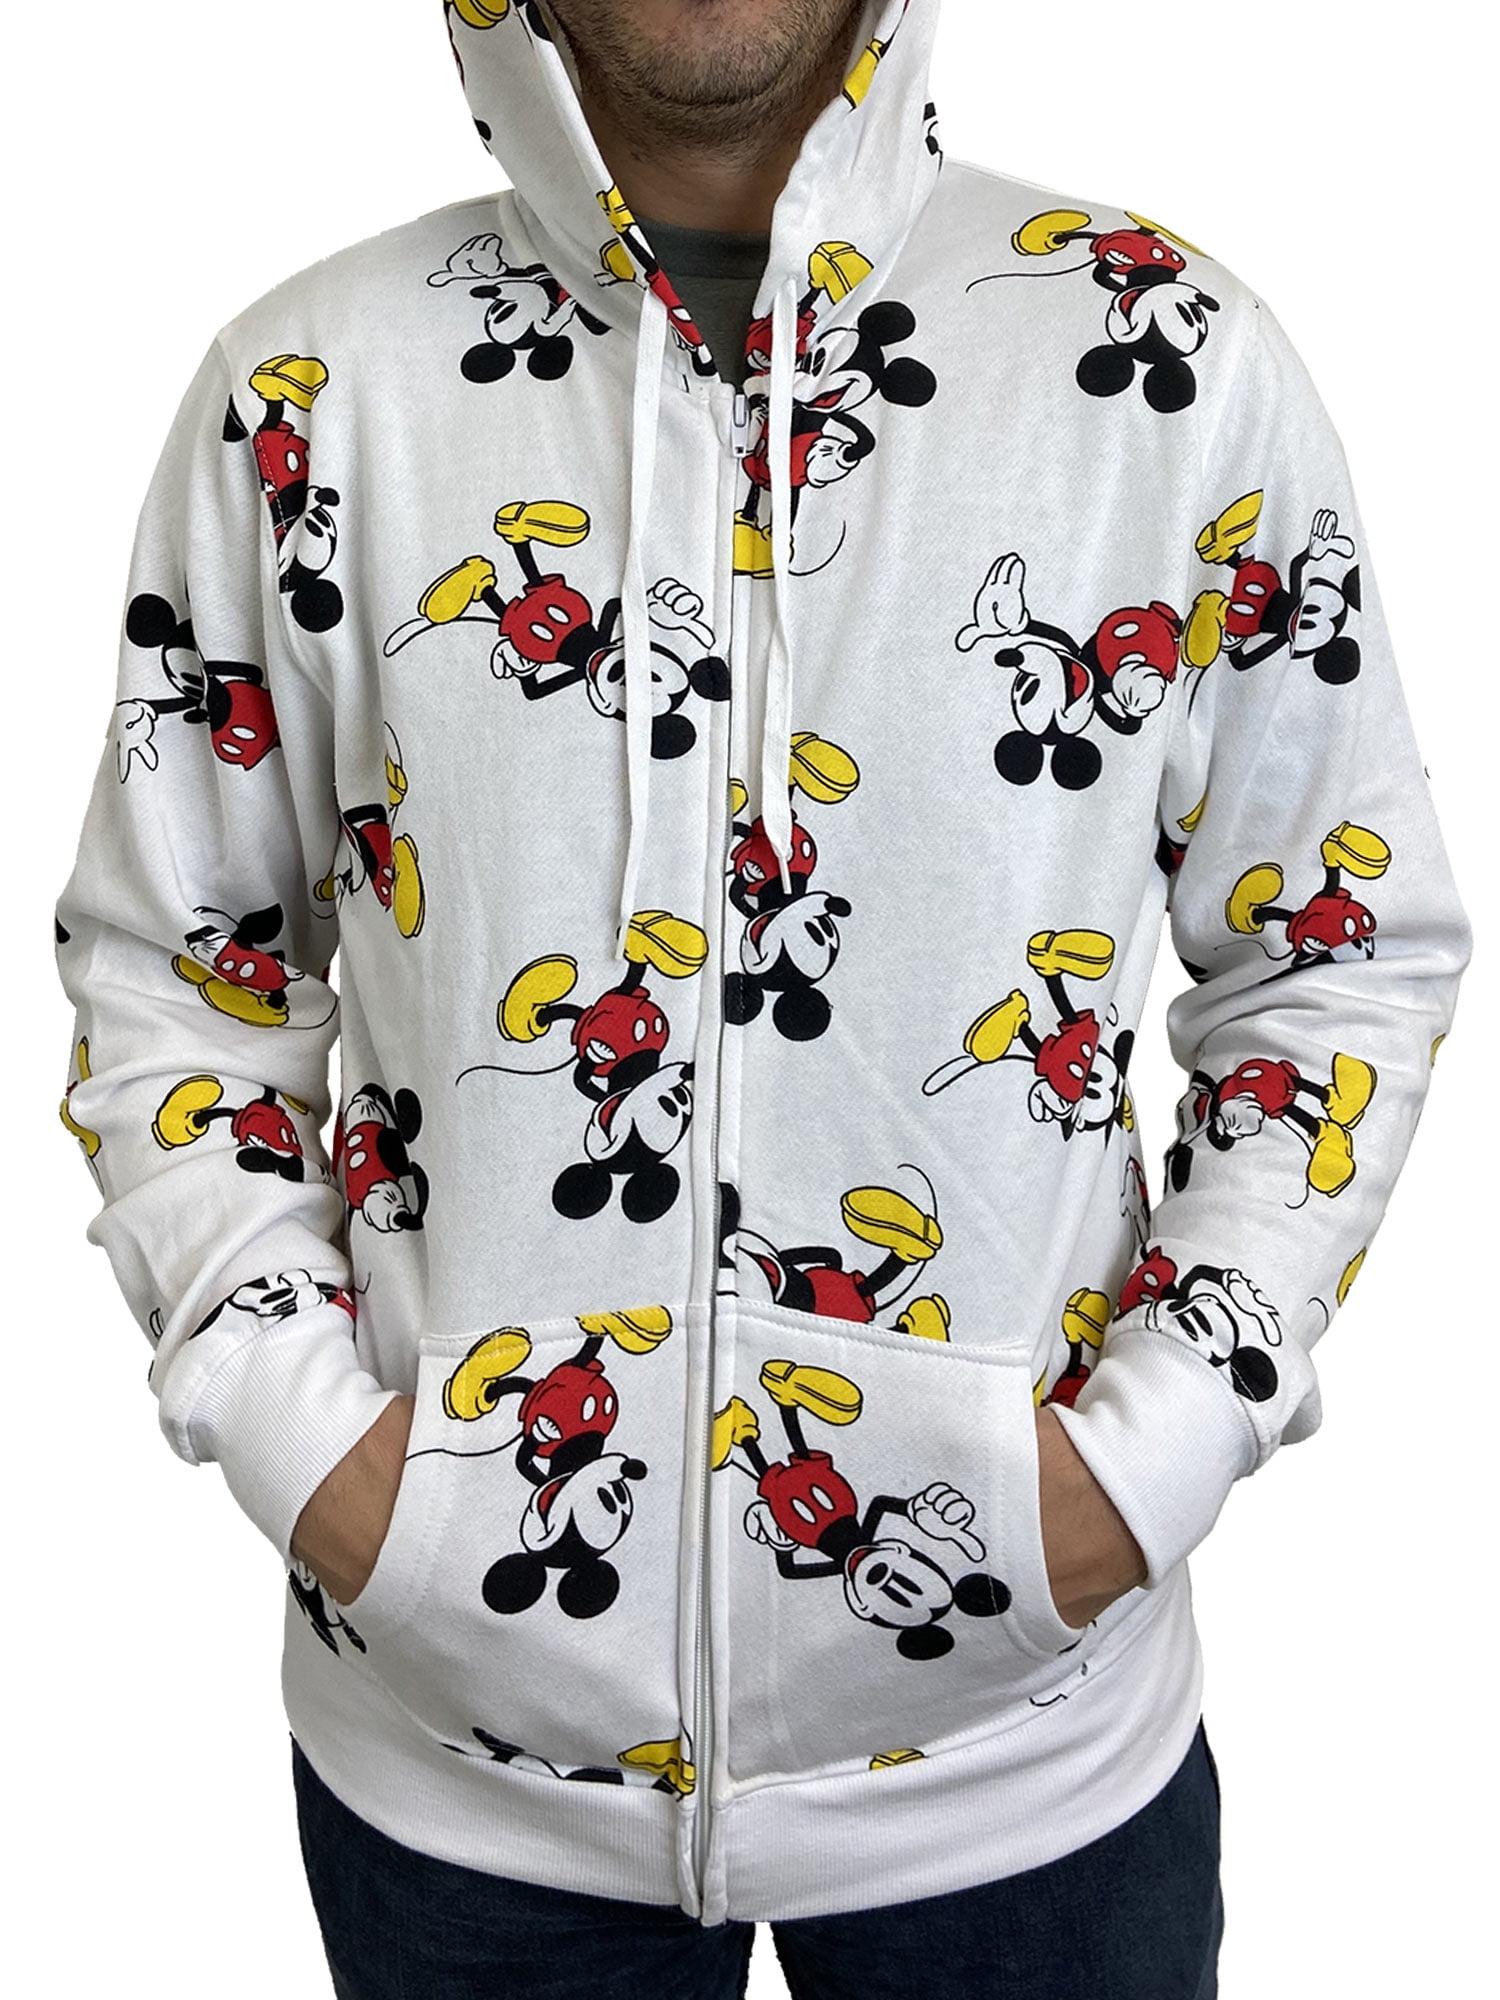 Visiter la boutique DisneyDisney Mickey Mouse Bossy Black and White Men's Sweatshirt 